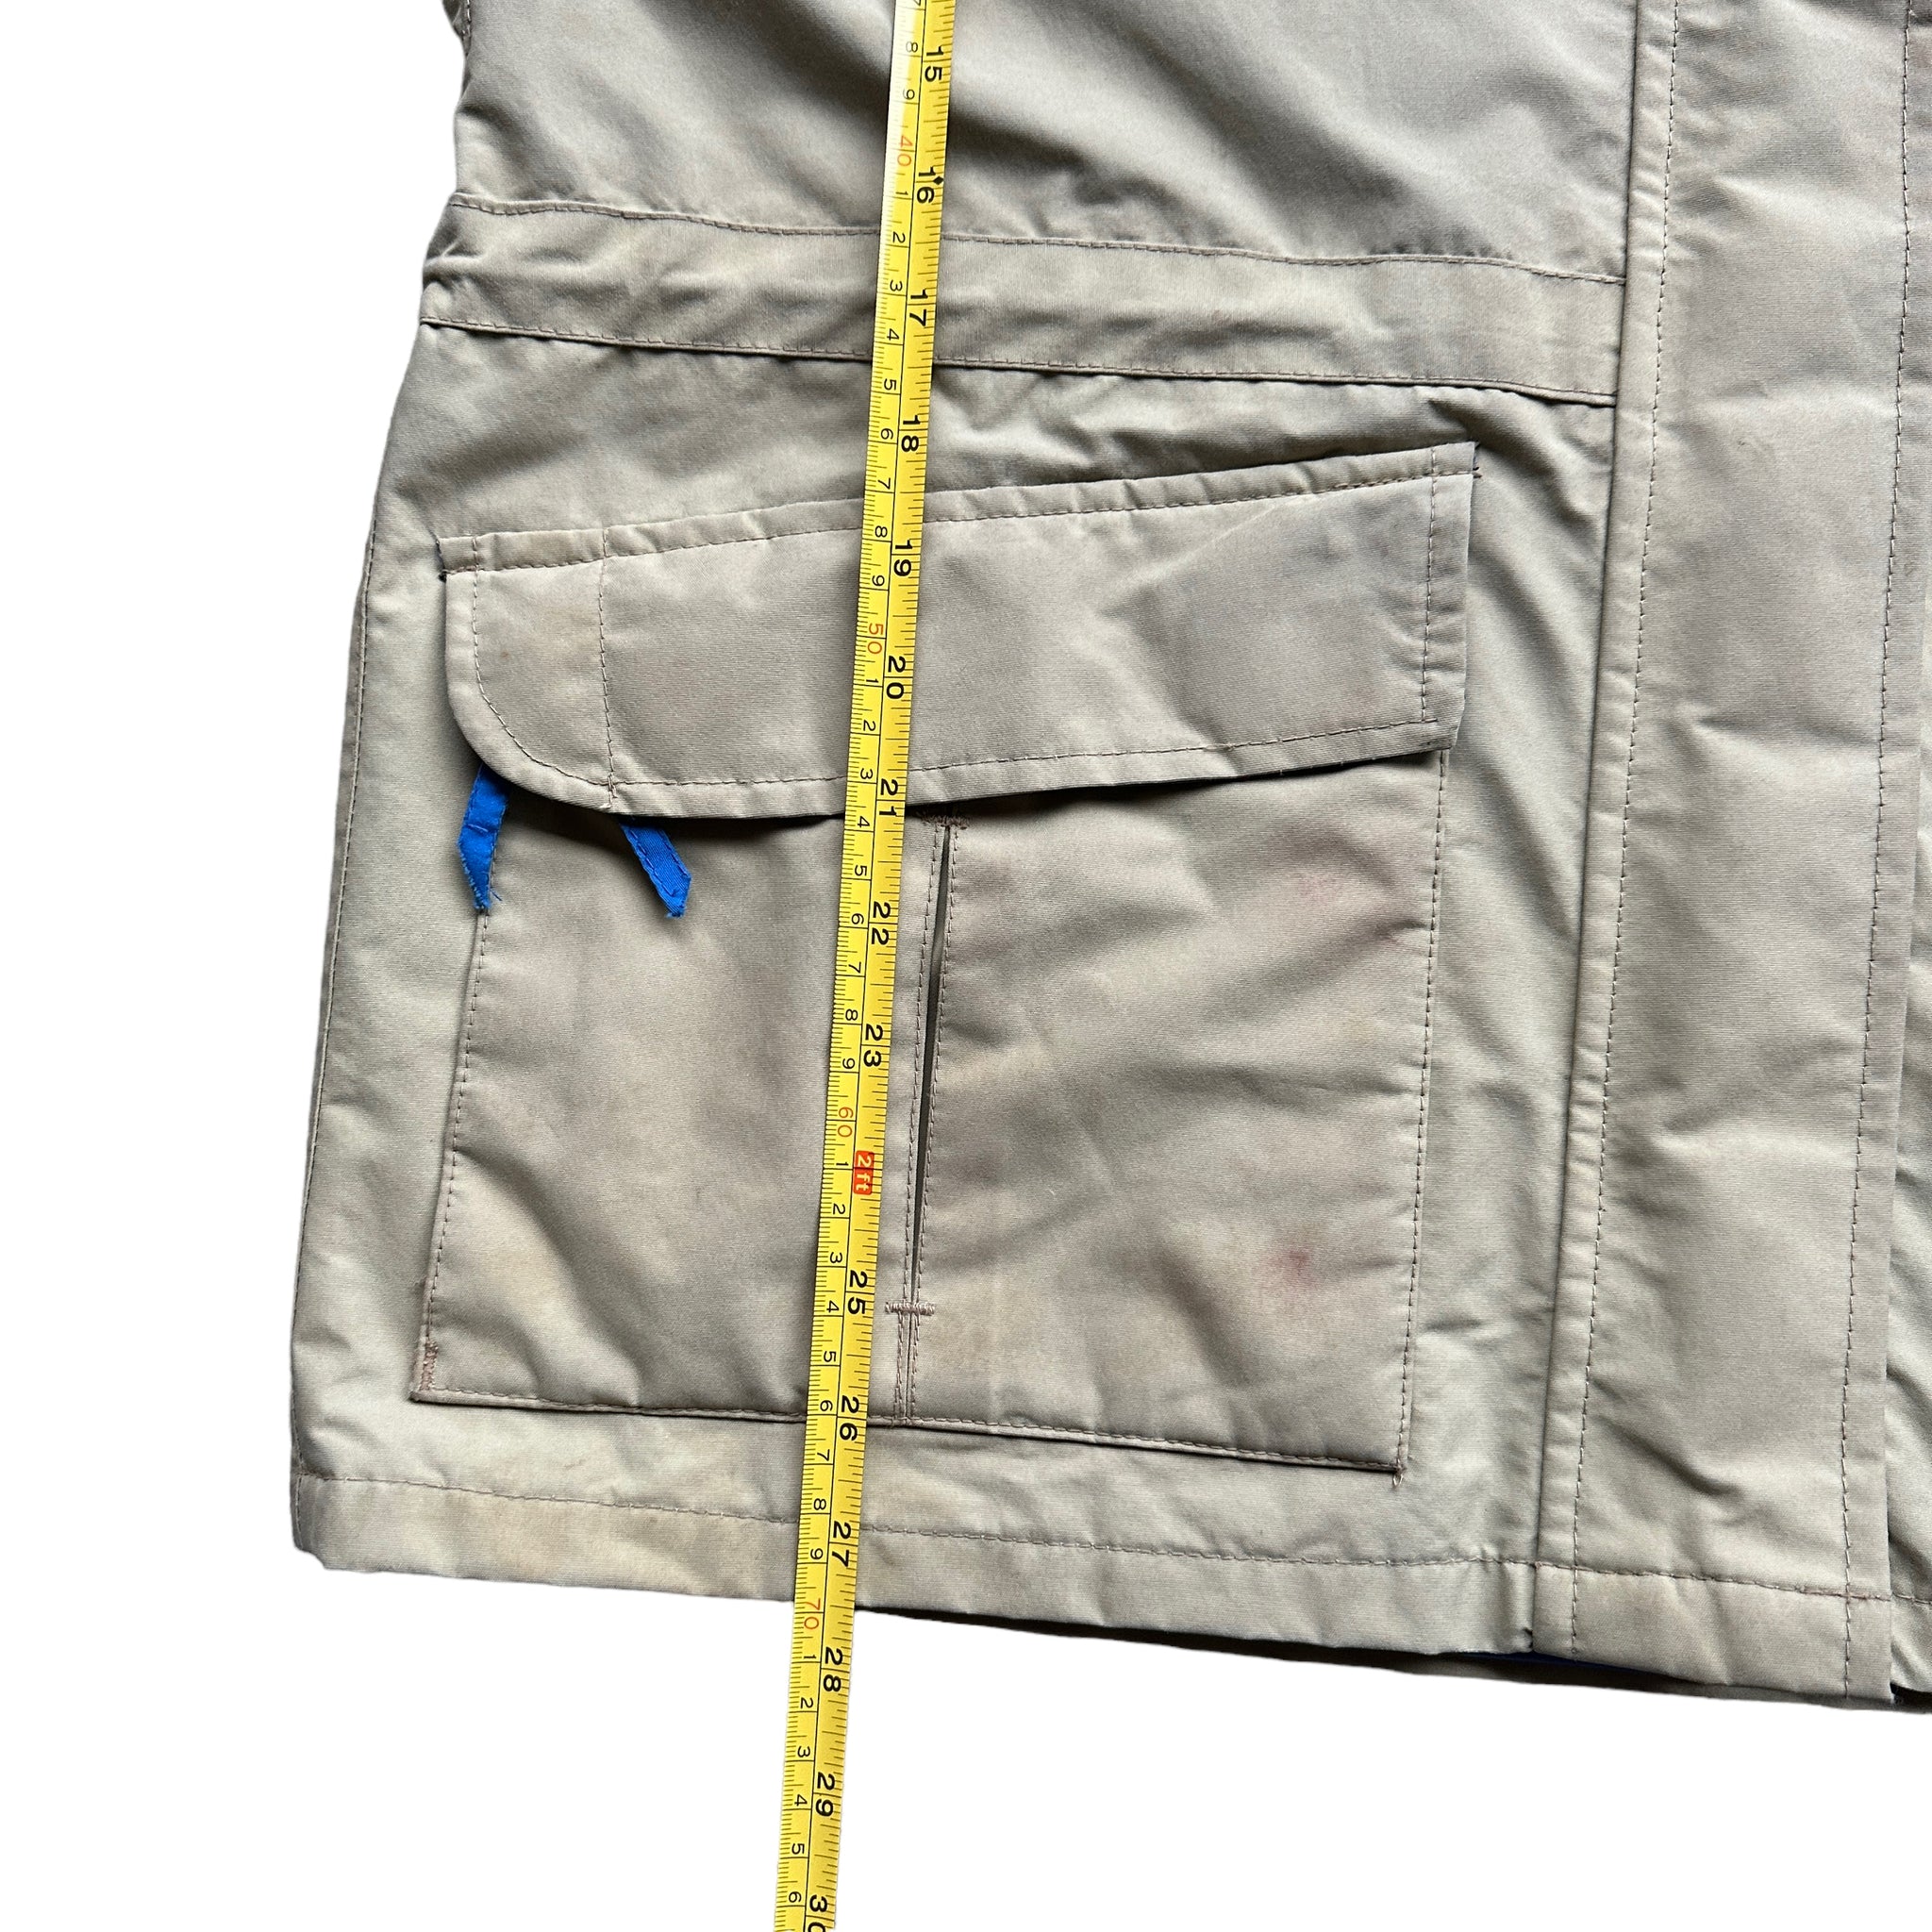 1989 EMS goretex jacket medium